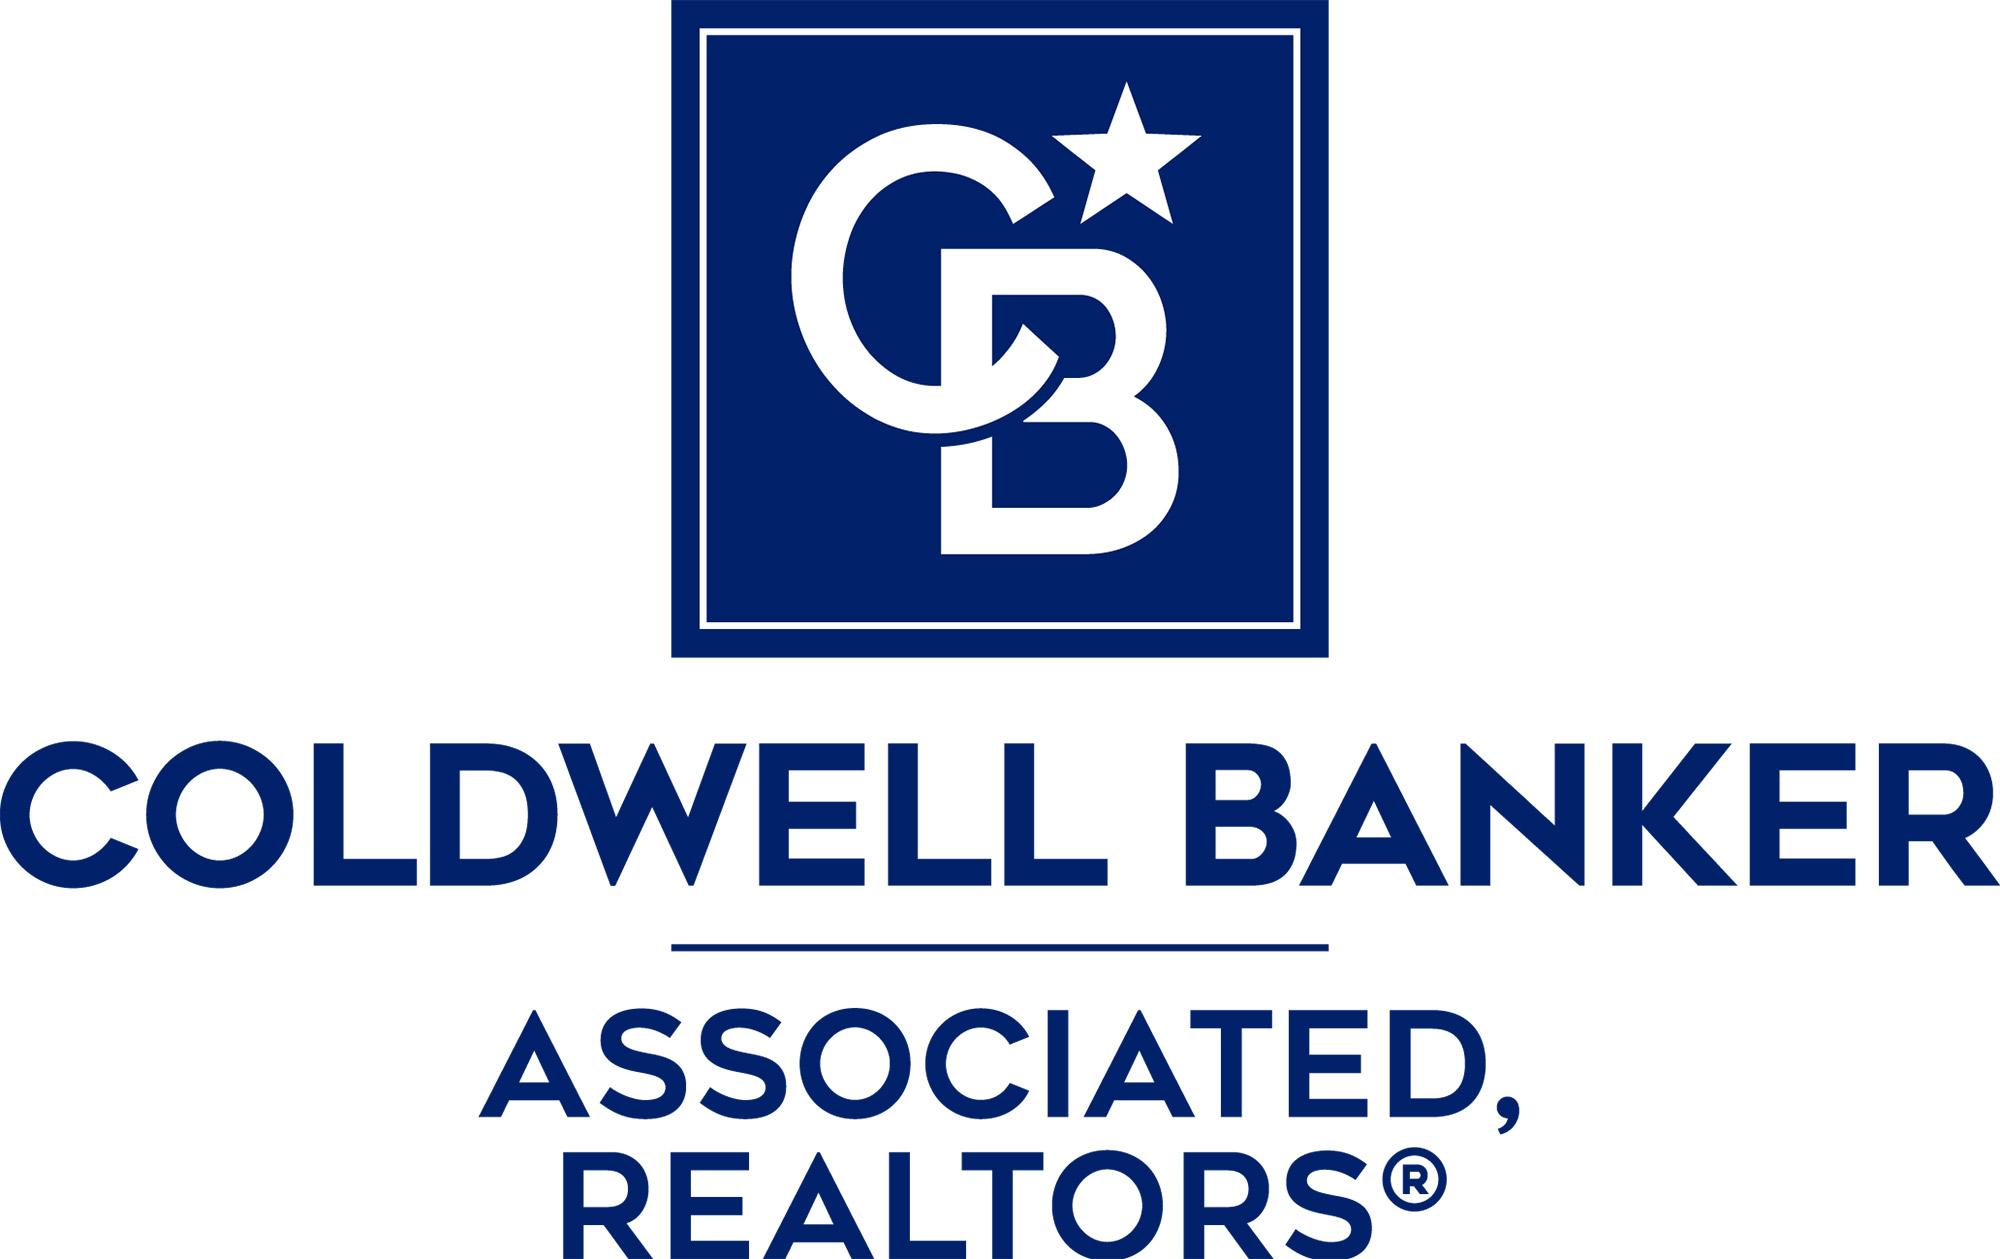 Coldwell Banker Associated Realtors's Image